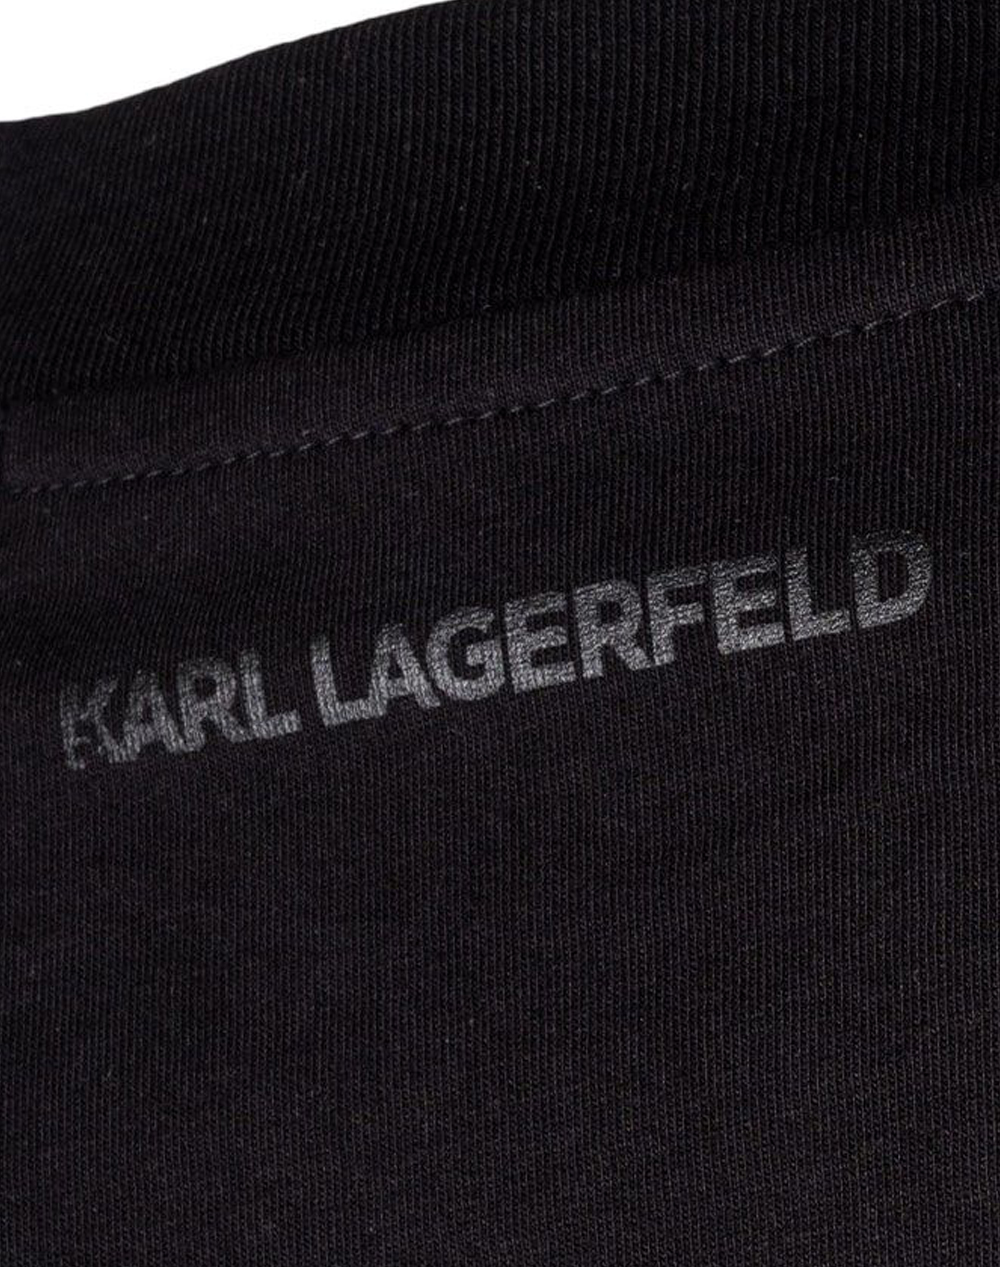 KARL LAGERFELD T-SHIRT CREWNECK